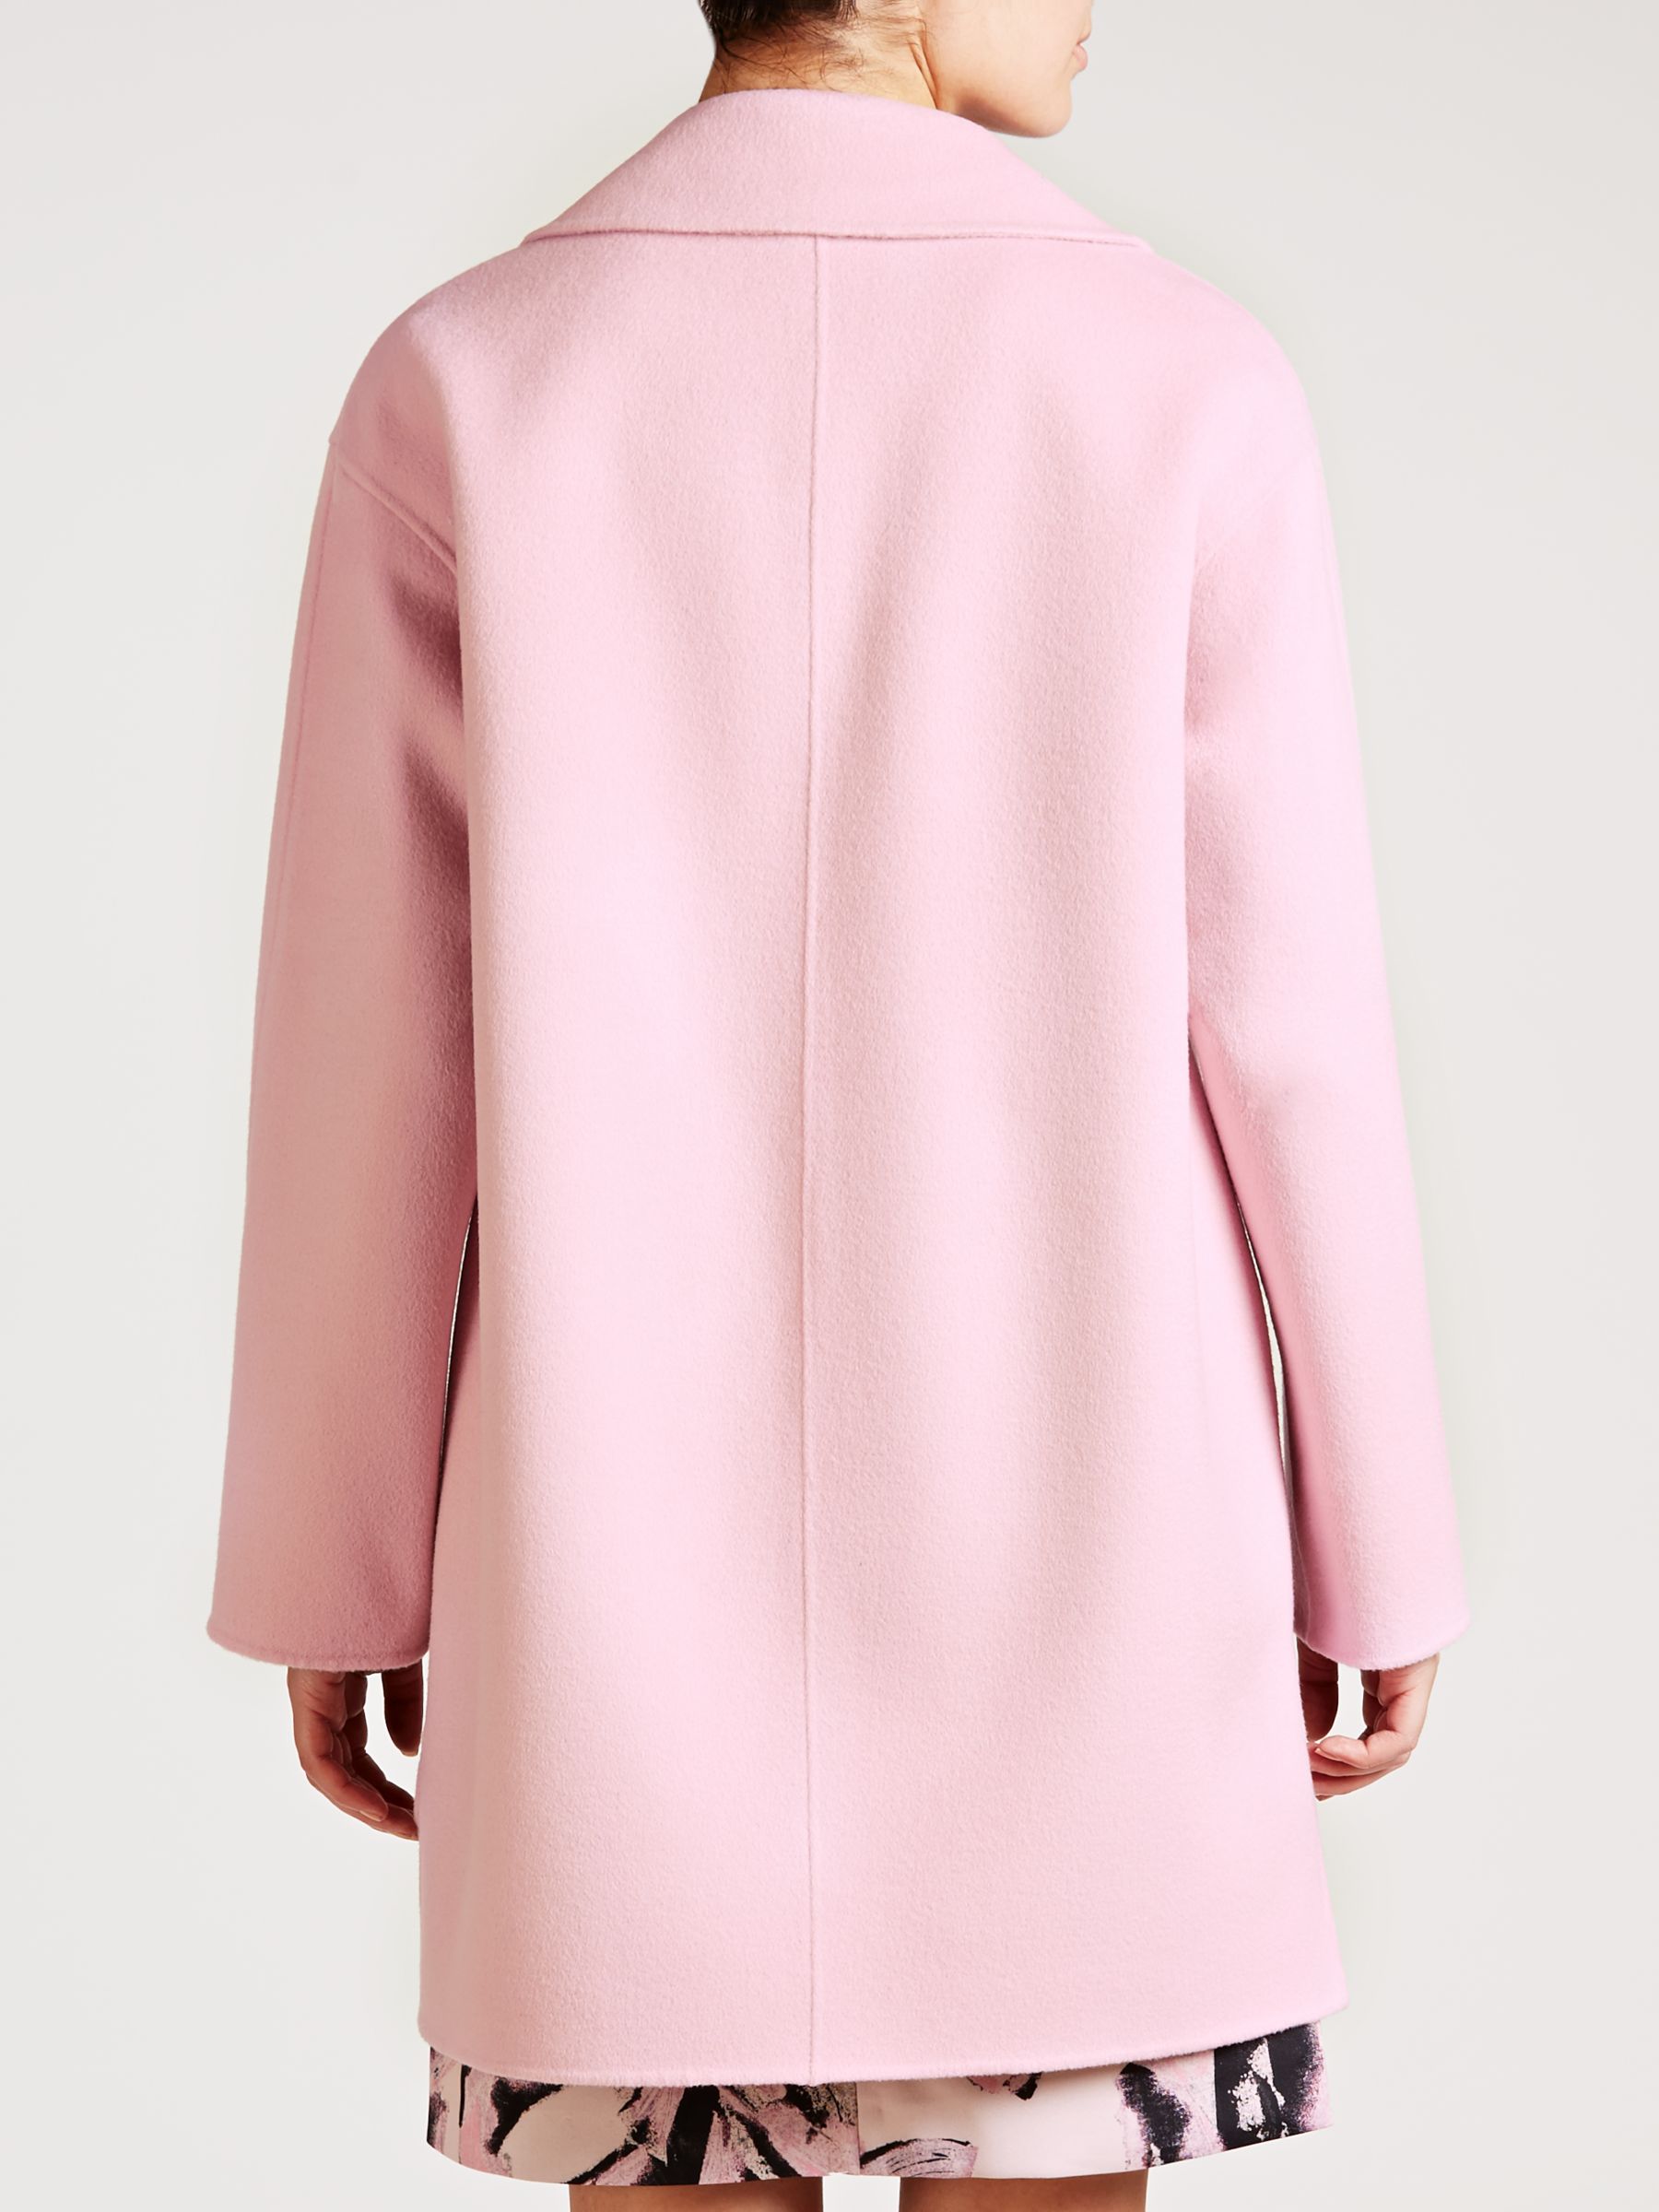 Marella Tobia Wool Cashmere Coat, Pink at John Lewis & Partners